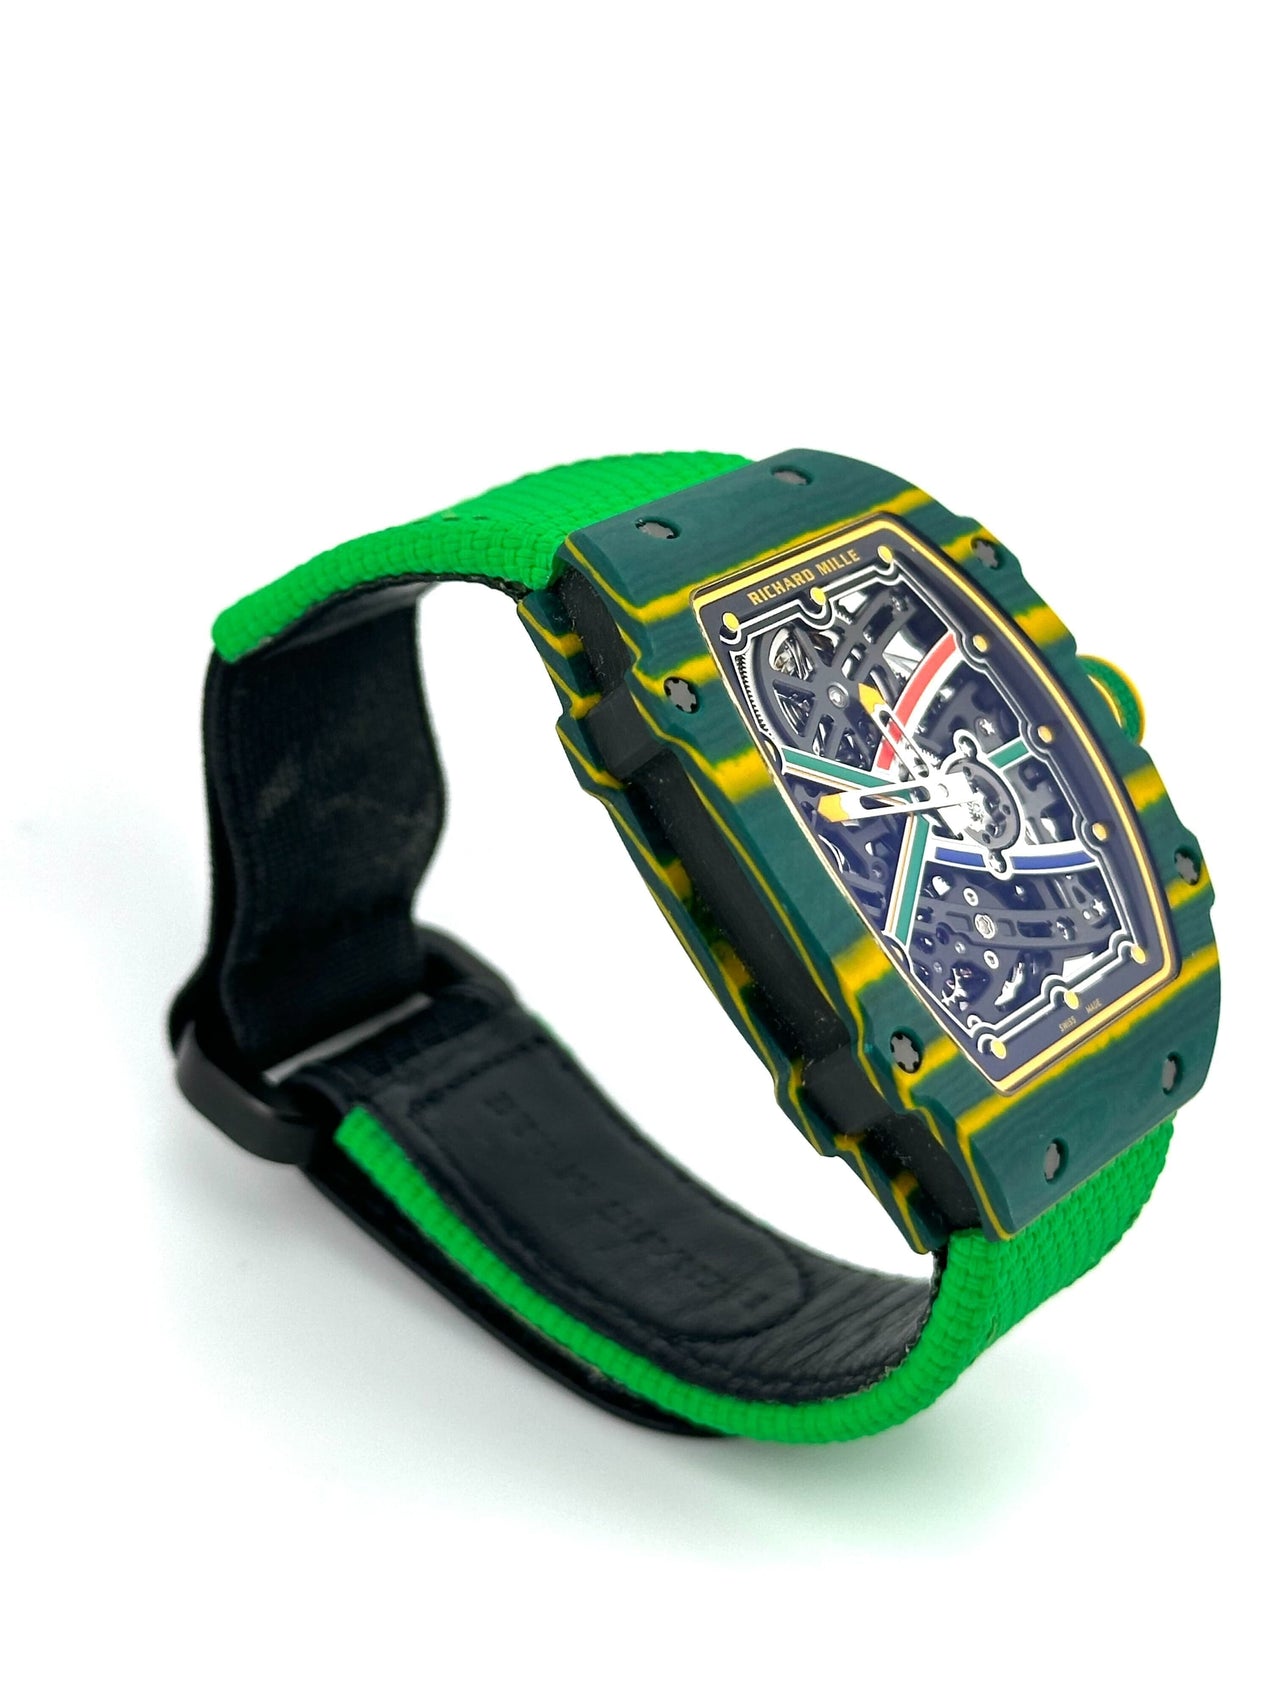 Luxury Watch Richard Mille Automatic Wayde Van Niekerkt Carbon Extra Flat Skeleton Dial  RM67-02 Wrist Aficionado